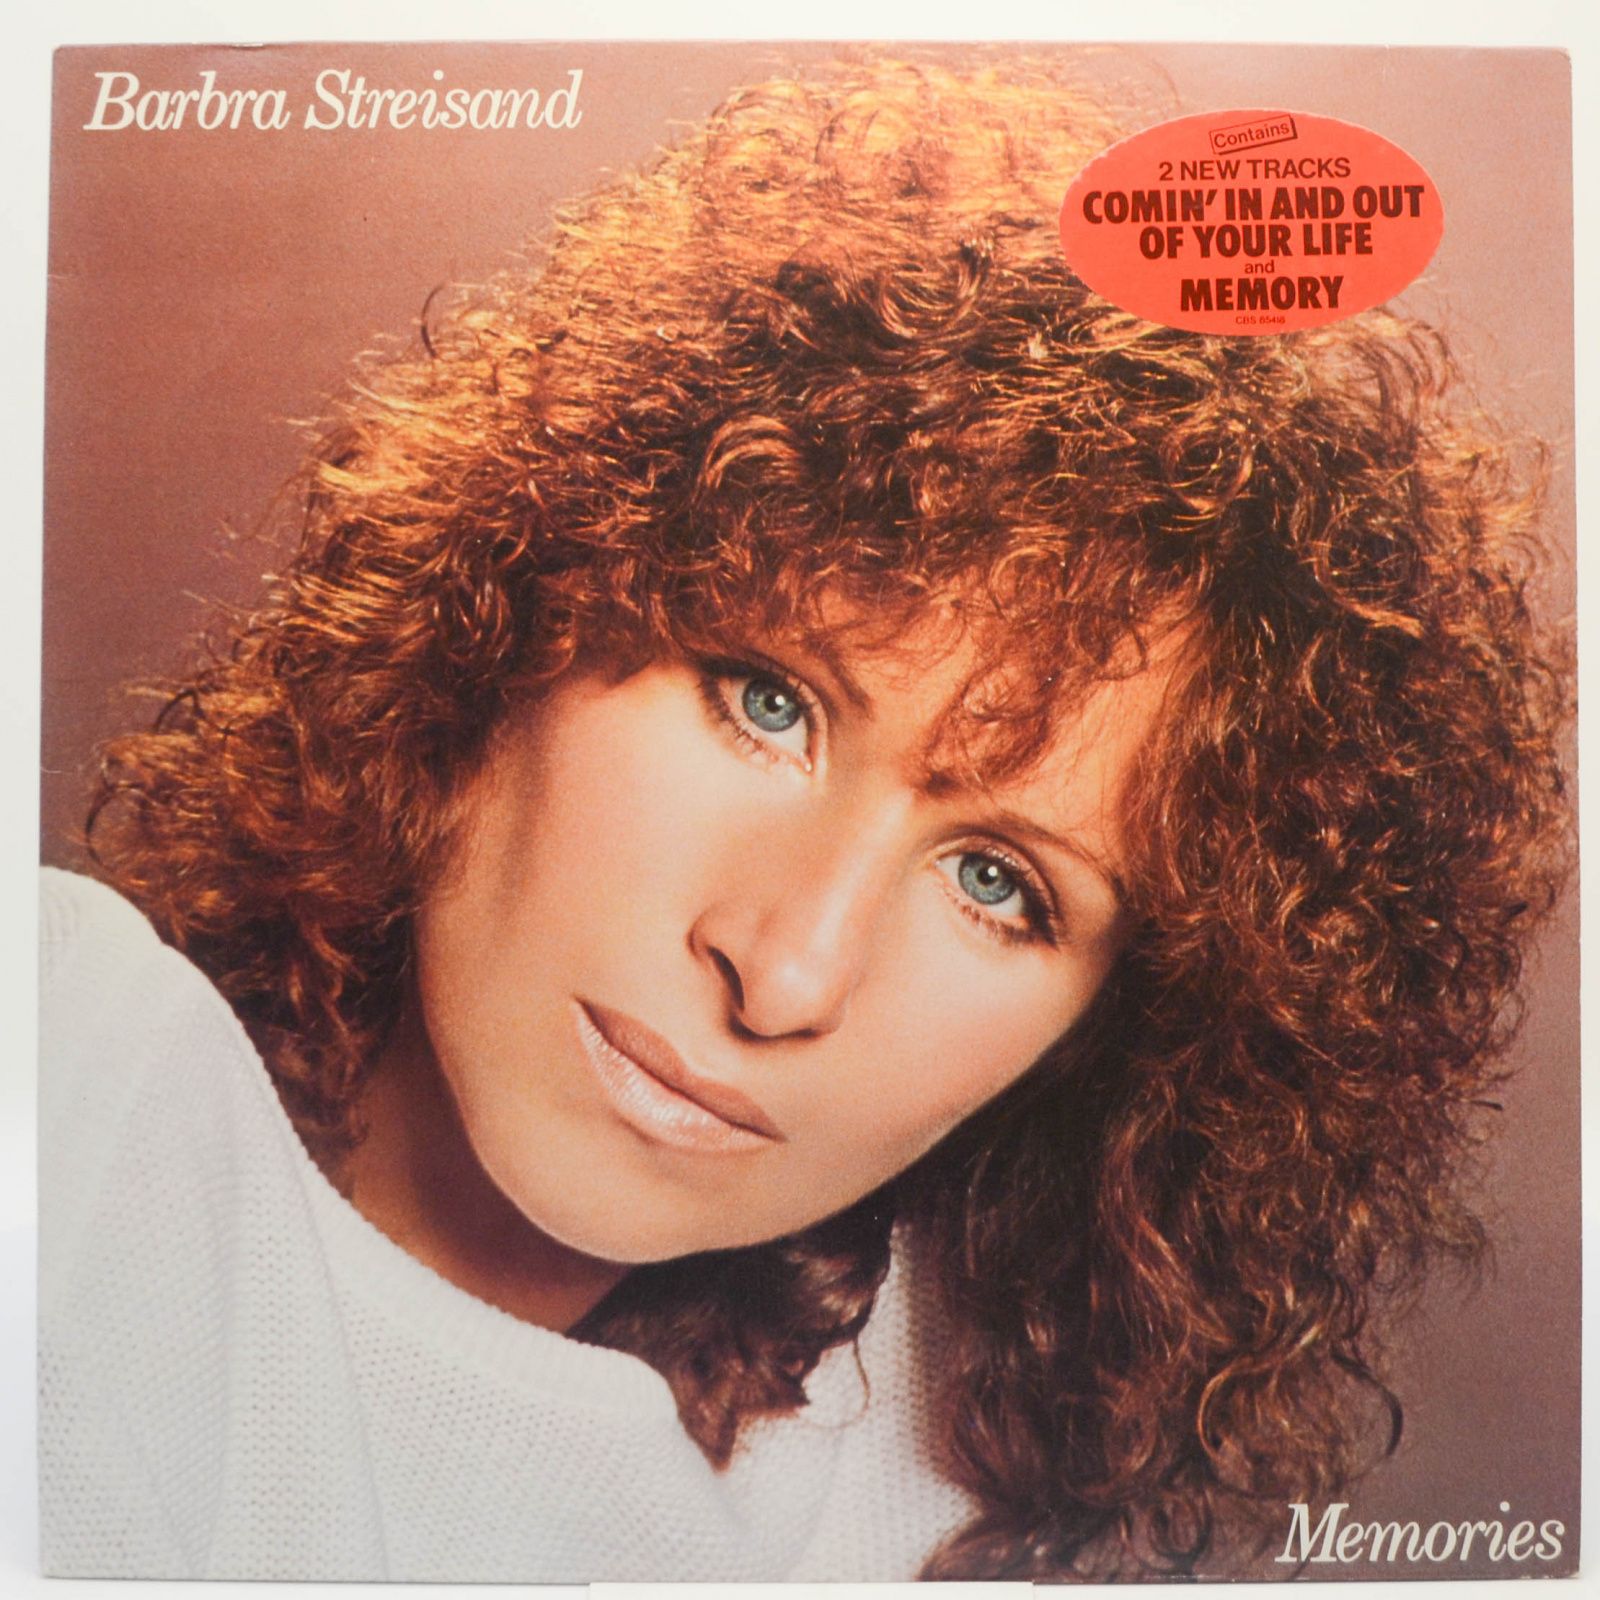 Barbra Streisand — Memories, 1981